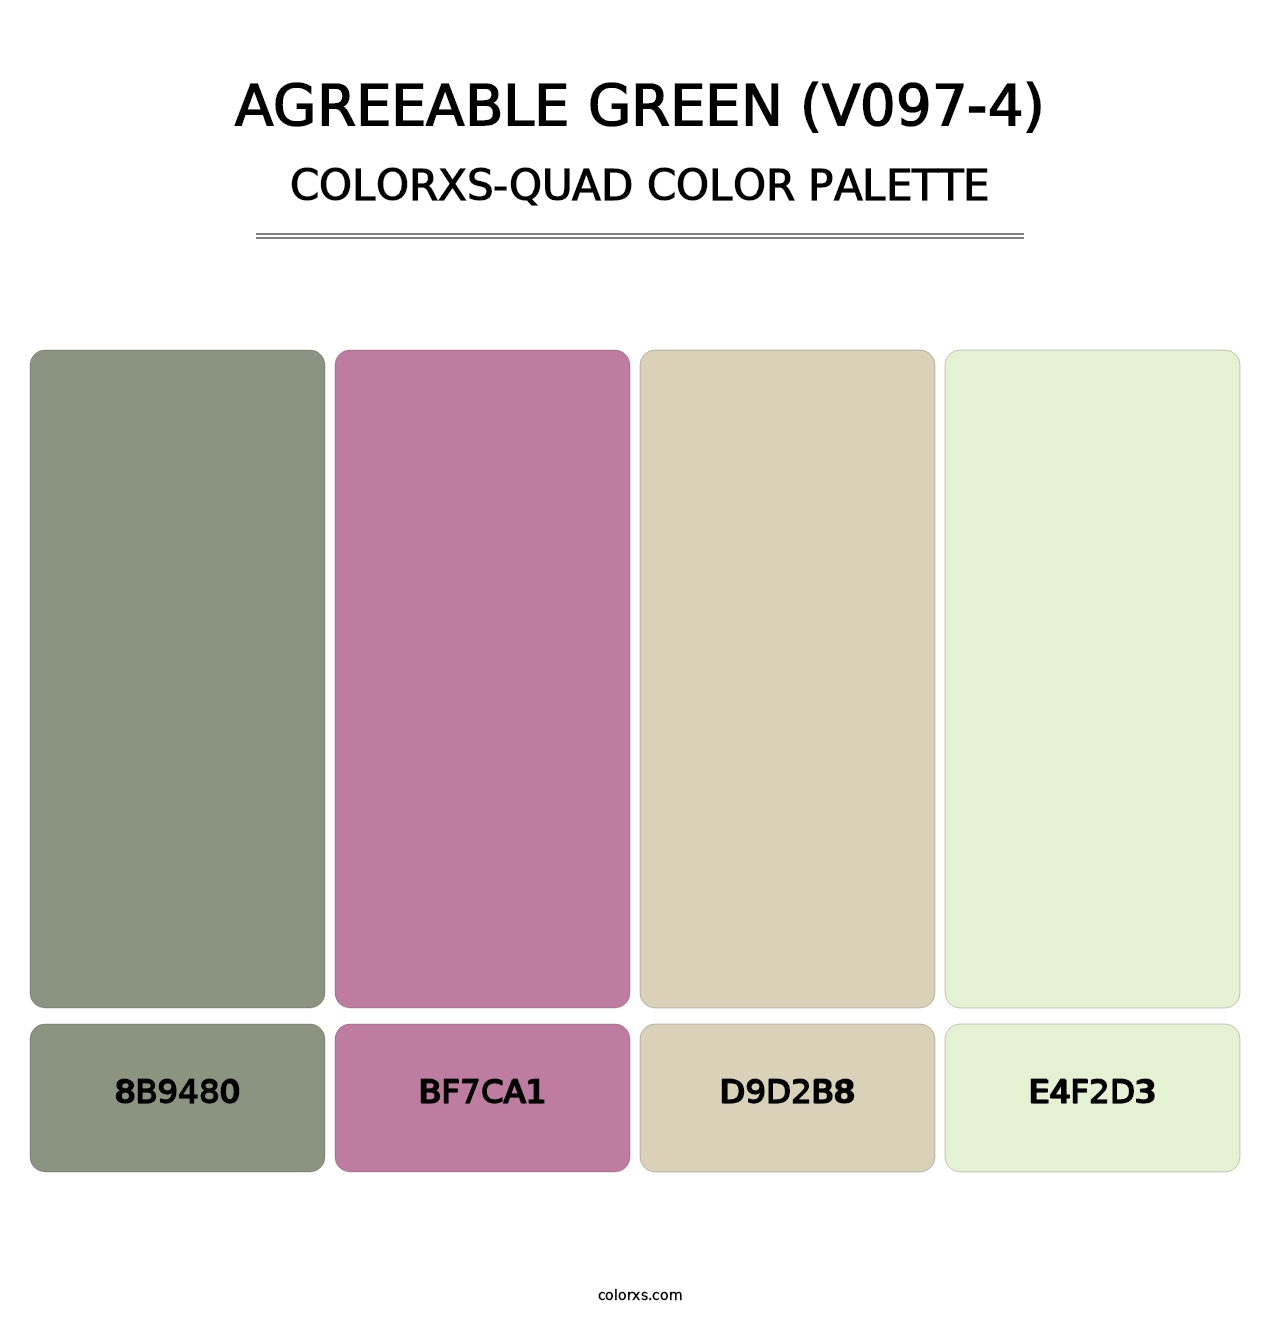 Agreeable Green (V097-4) - Colorxs Quad Palette